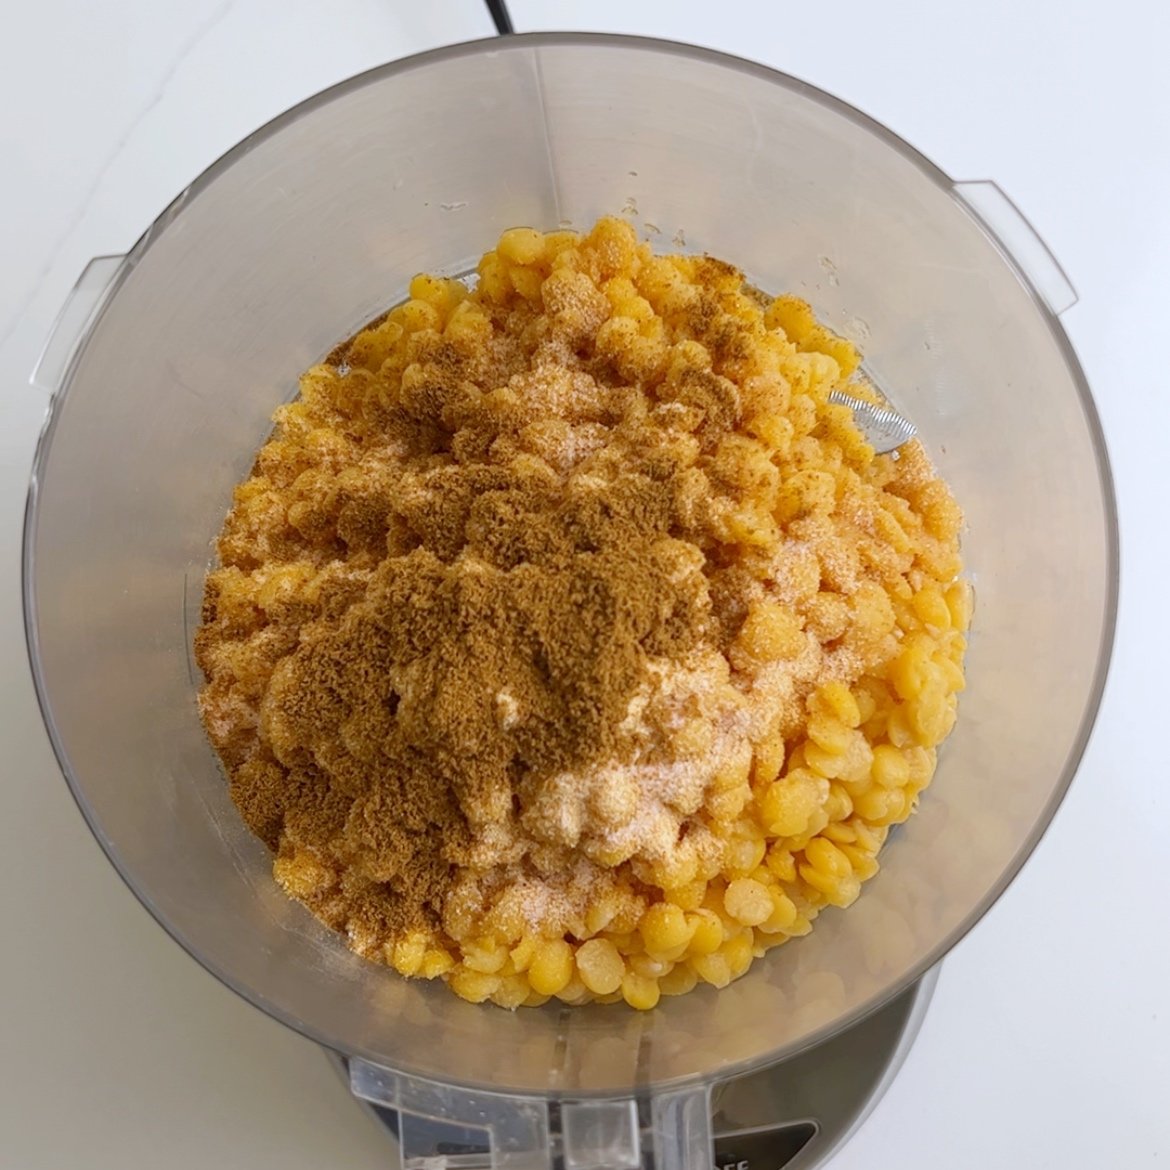 pea mixture in a food processor